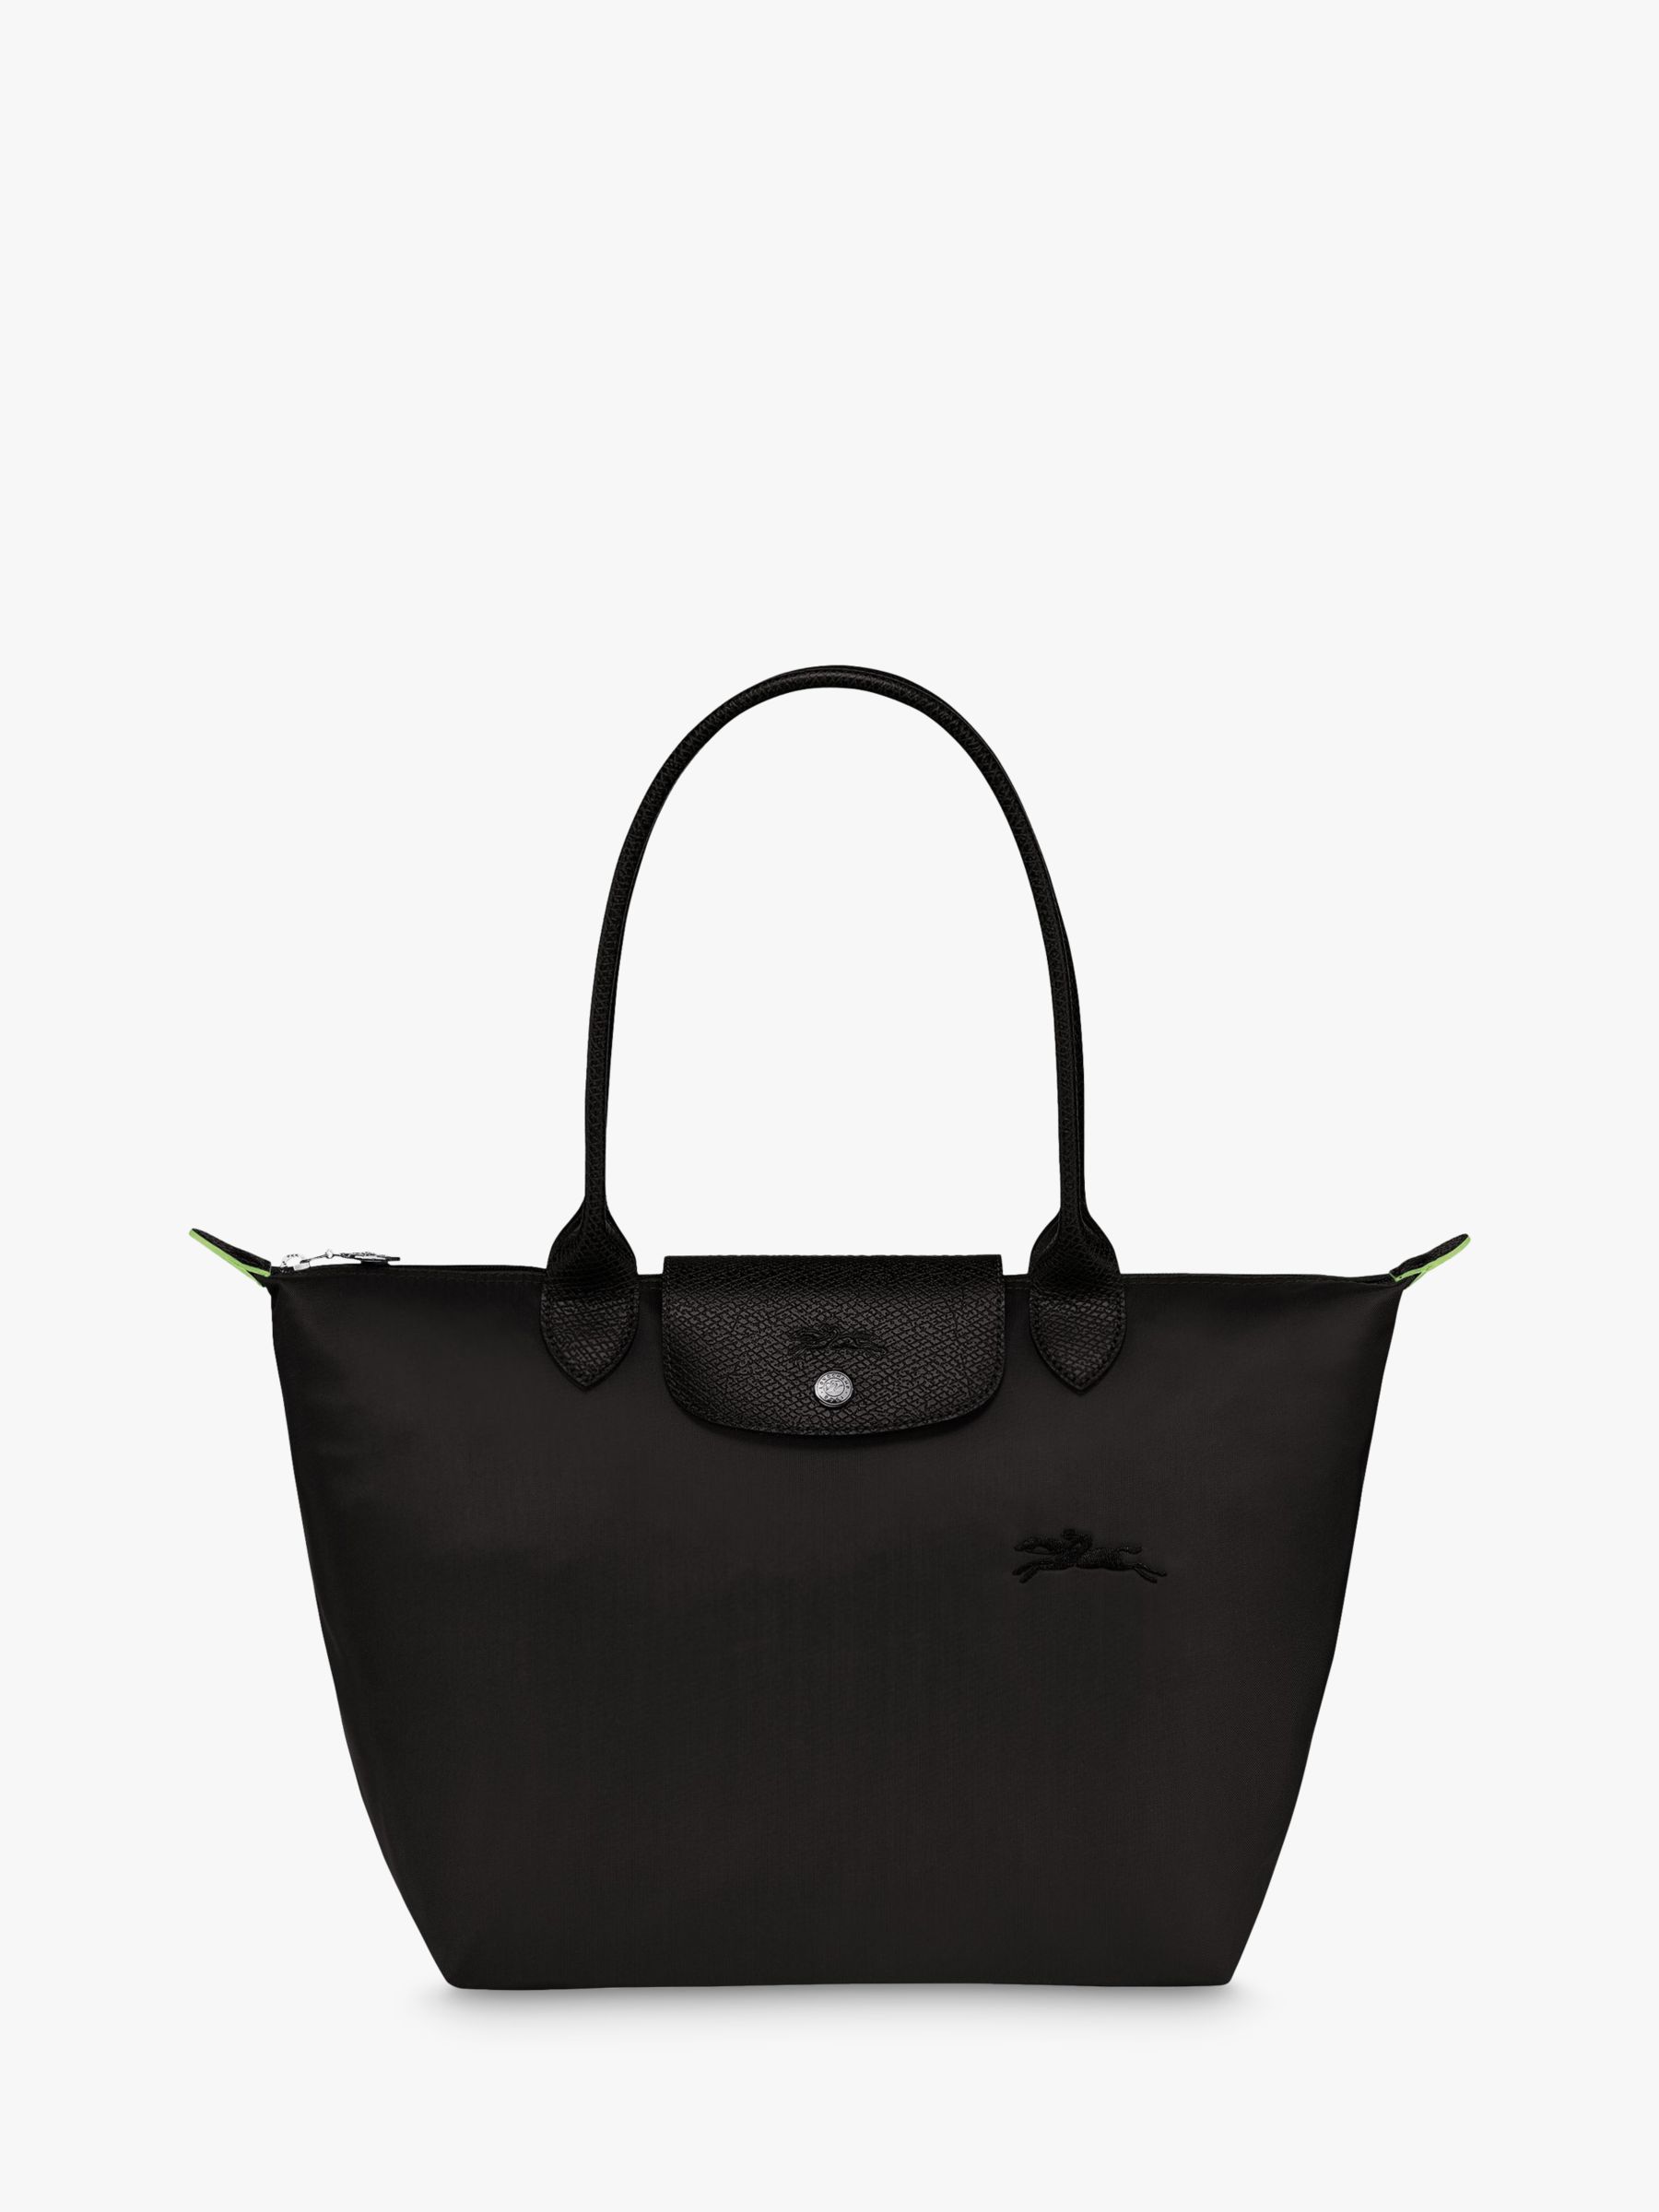 Large Messenger Bag Minimalist Solid Black